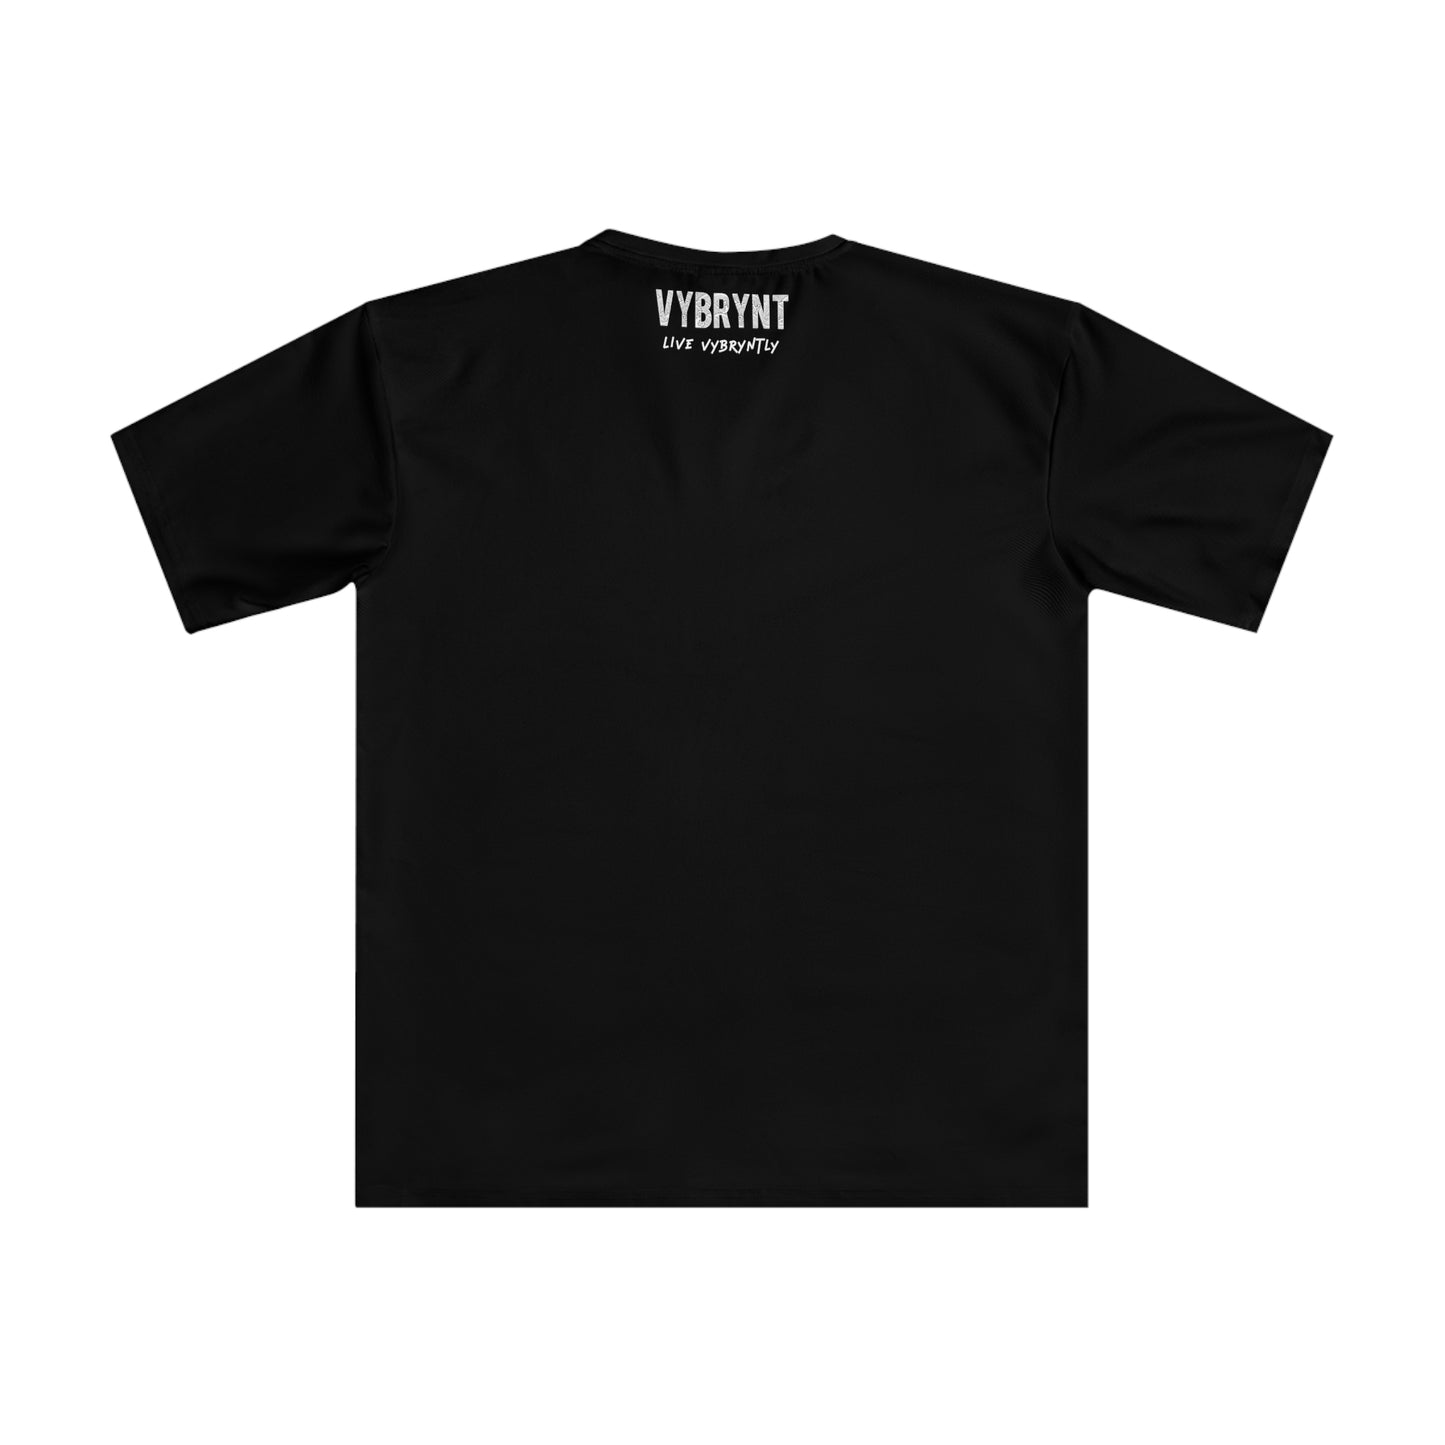 Anointed Men's Black T-shirt